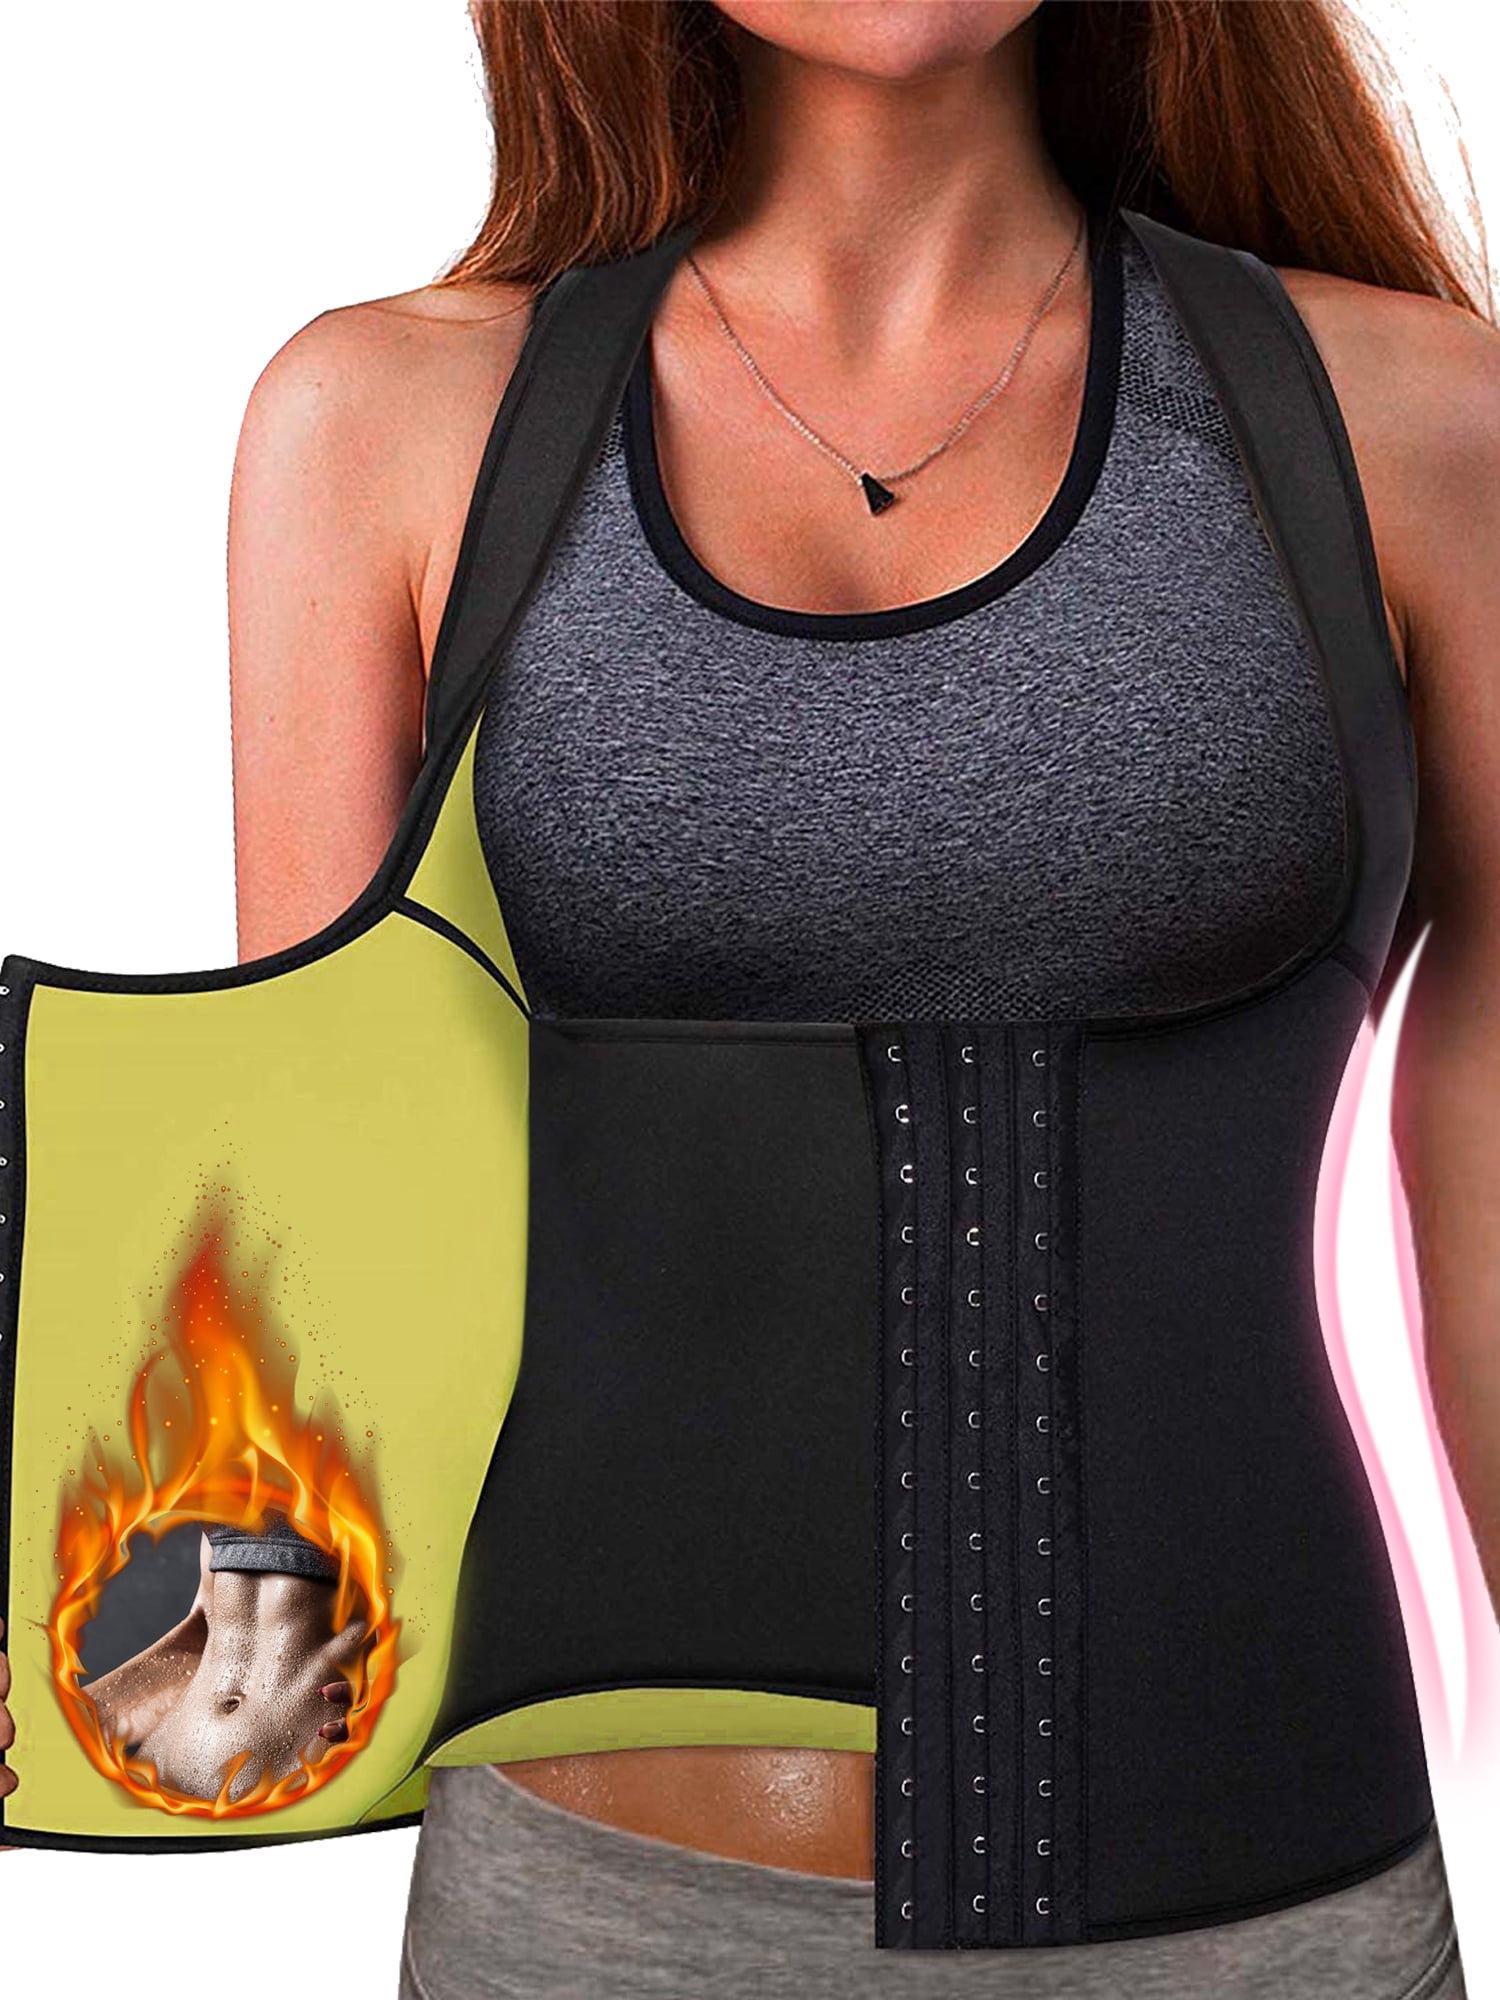 Waist Trainer Gym Tank Top Ladies Sport Underbust Sauna Shirt Top Vest for Weight Loss Body Shaper Slimming Vest Hot Sweat Tank Top with zipper 